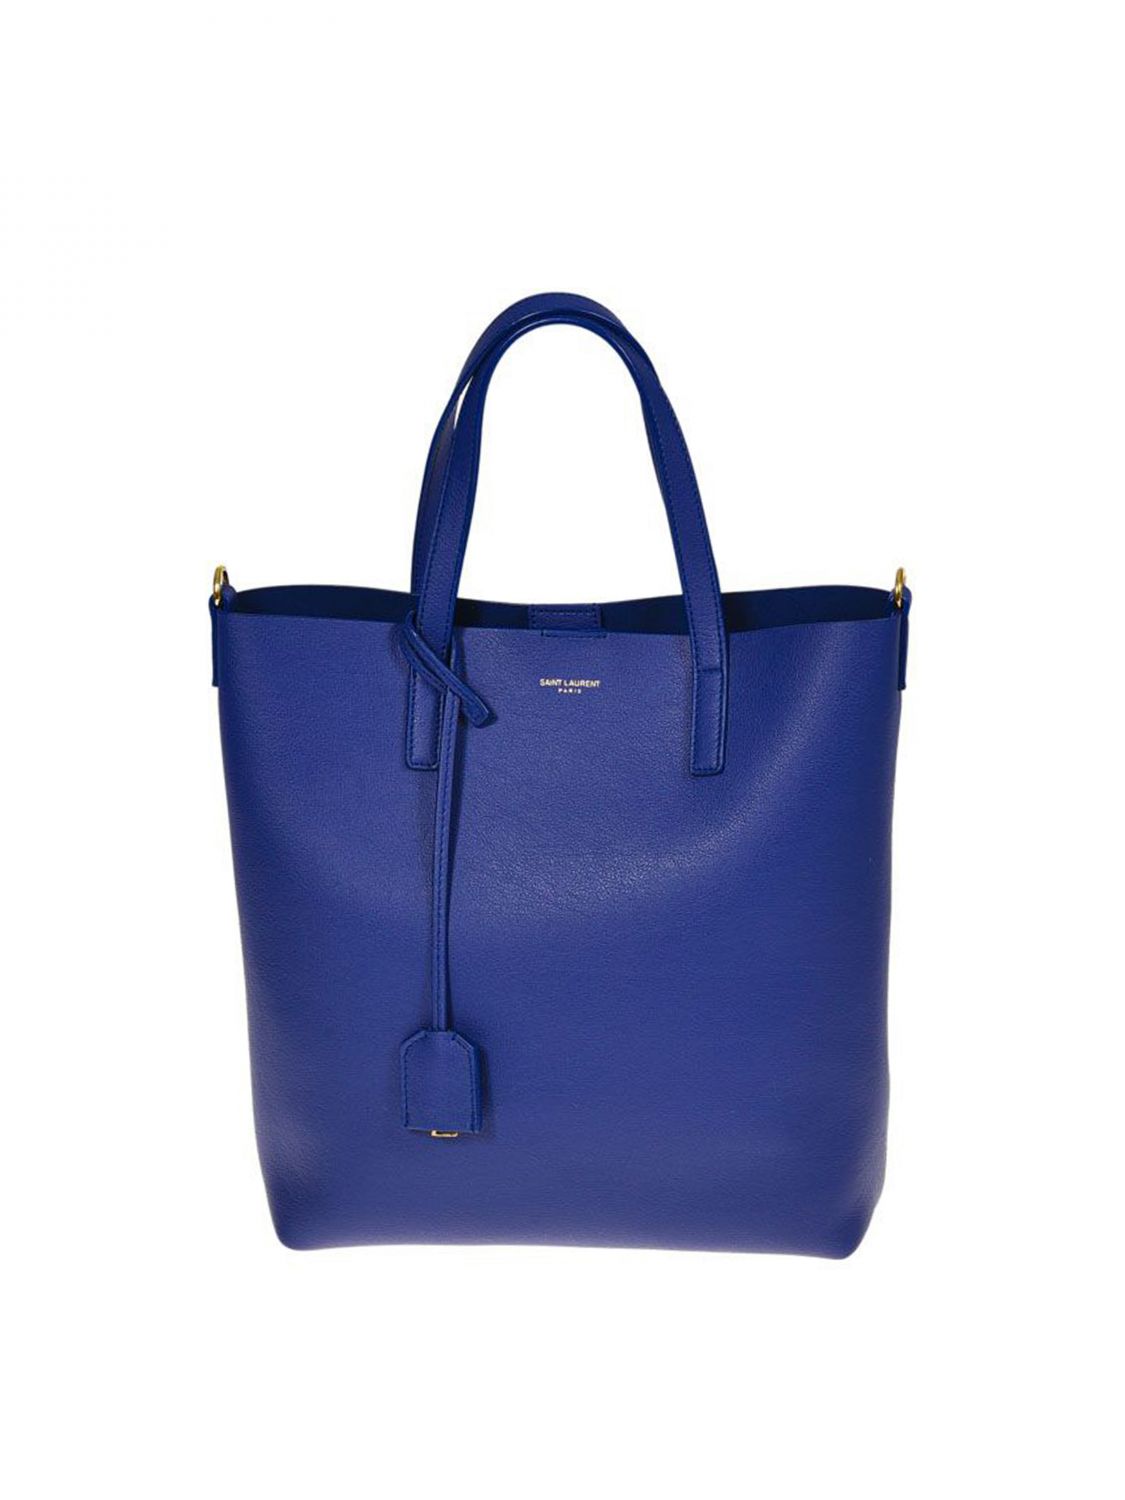 SAINT LAURENT: shopping bag in leather with logo - Blue | Saint Laurent ...